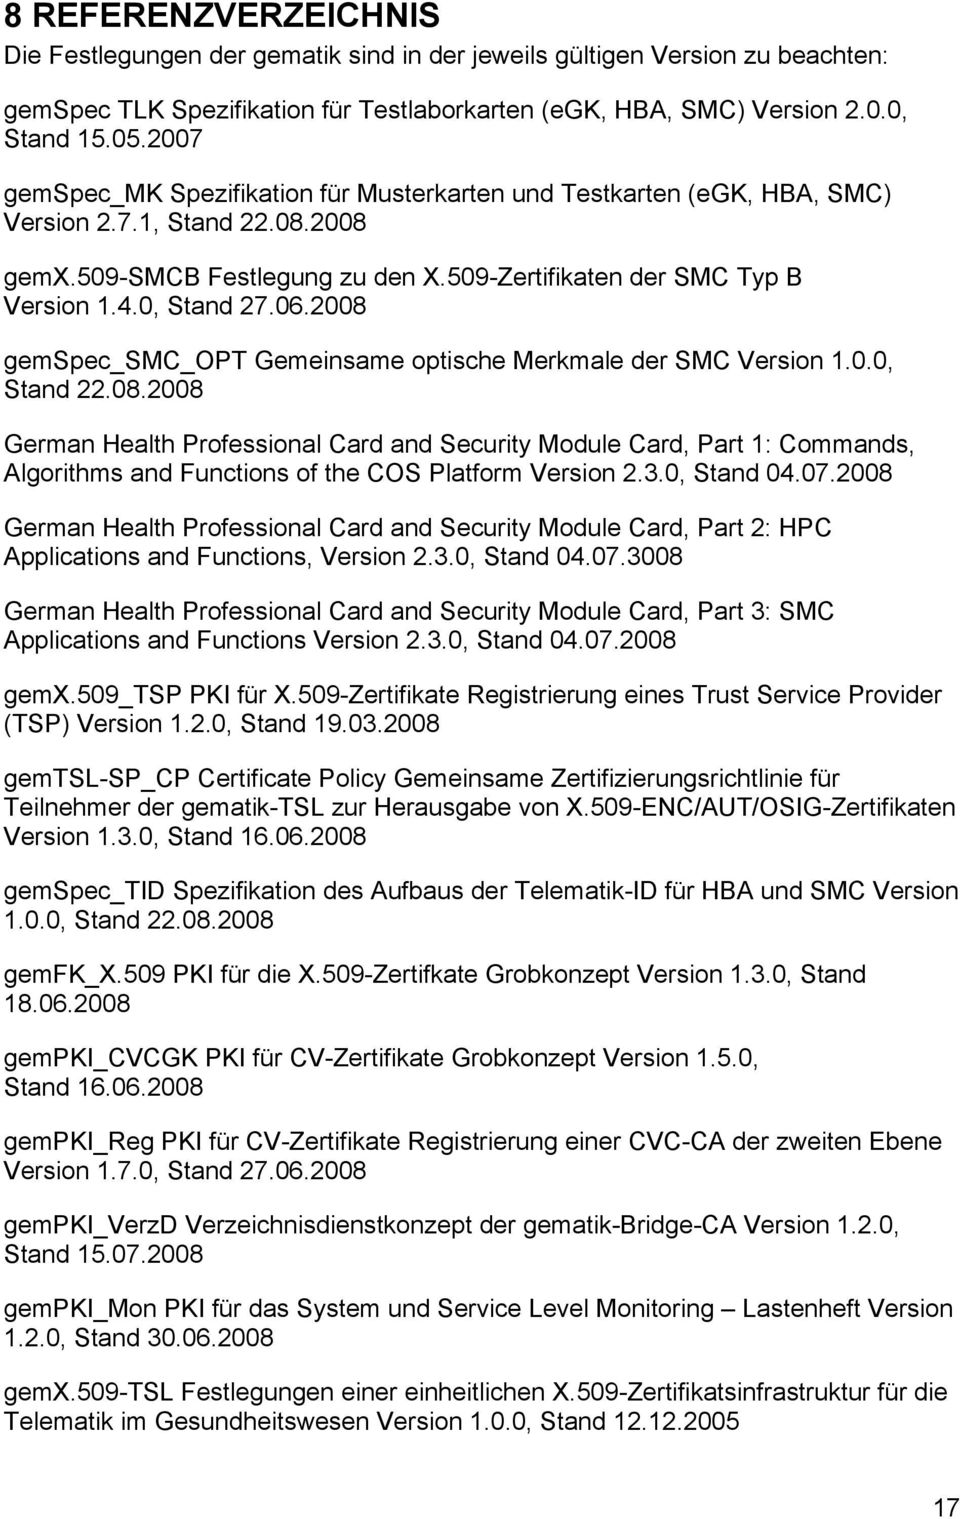 06.2008 gemspec_smc_opt Gemeinsame optische Merkmale der SMC Version 1.0.0, Stand 22.08.2008 German Health Professional Card and Security Module Card, Part 1: Commands, Algorithms and Functions of the COS Platform Version 2.